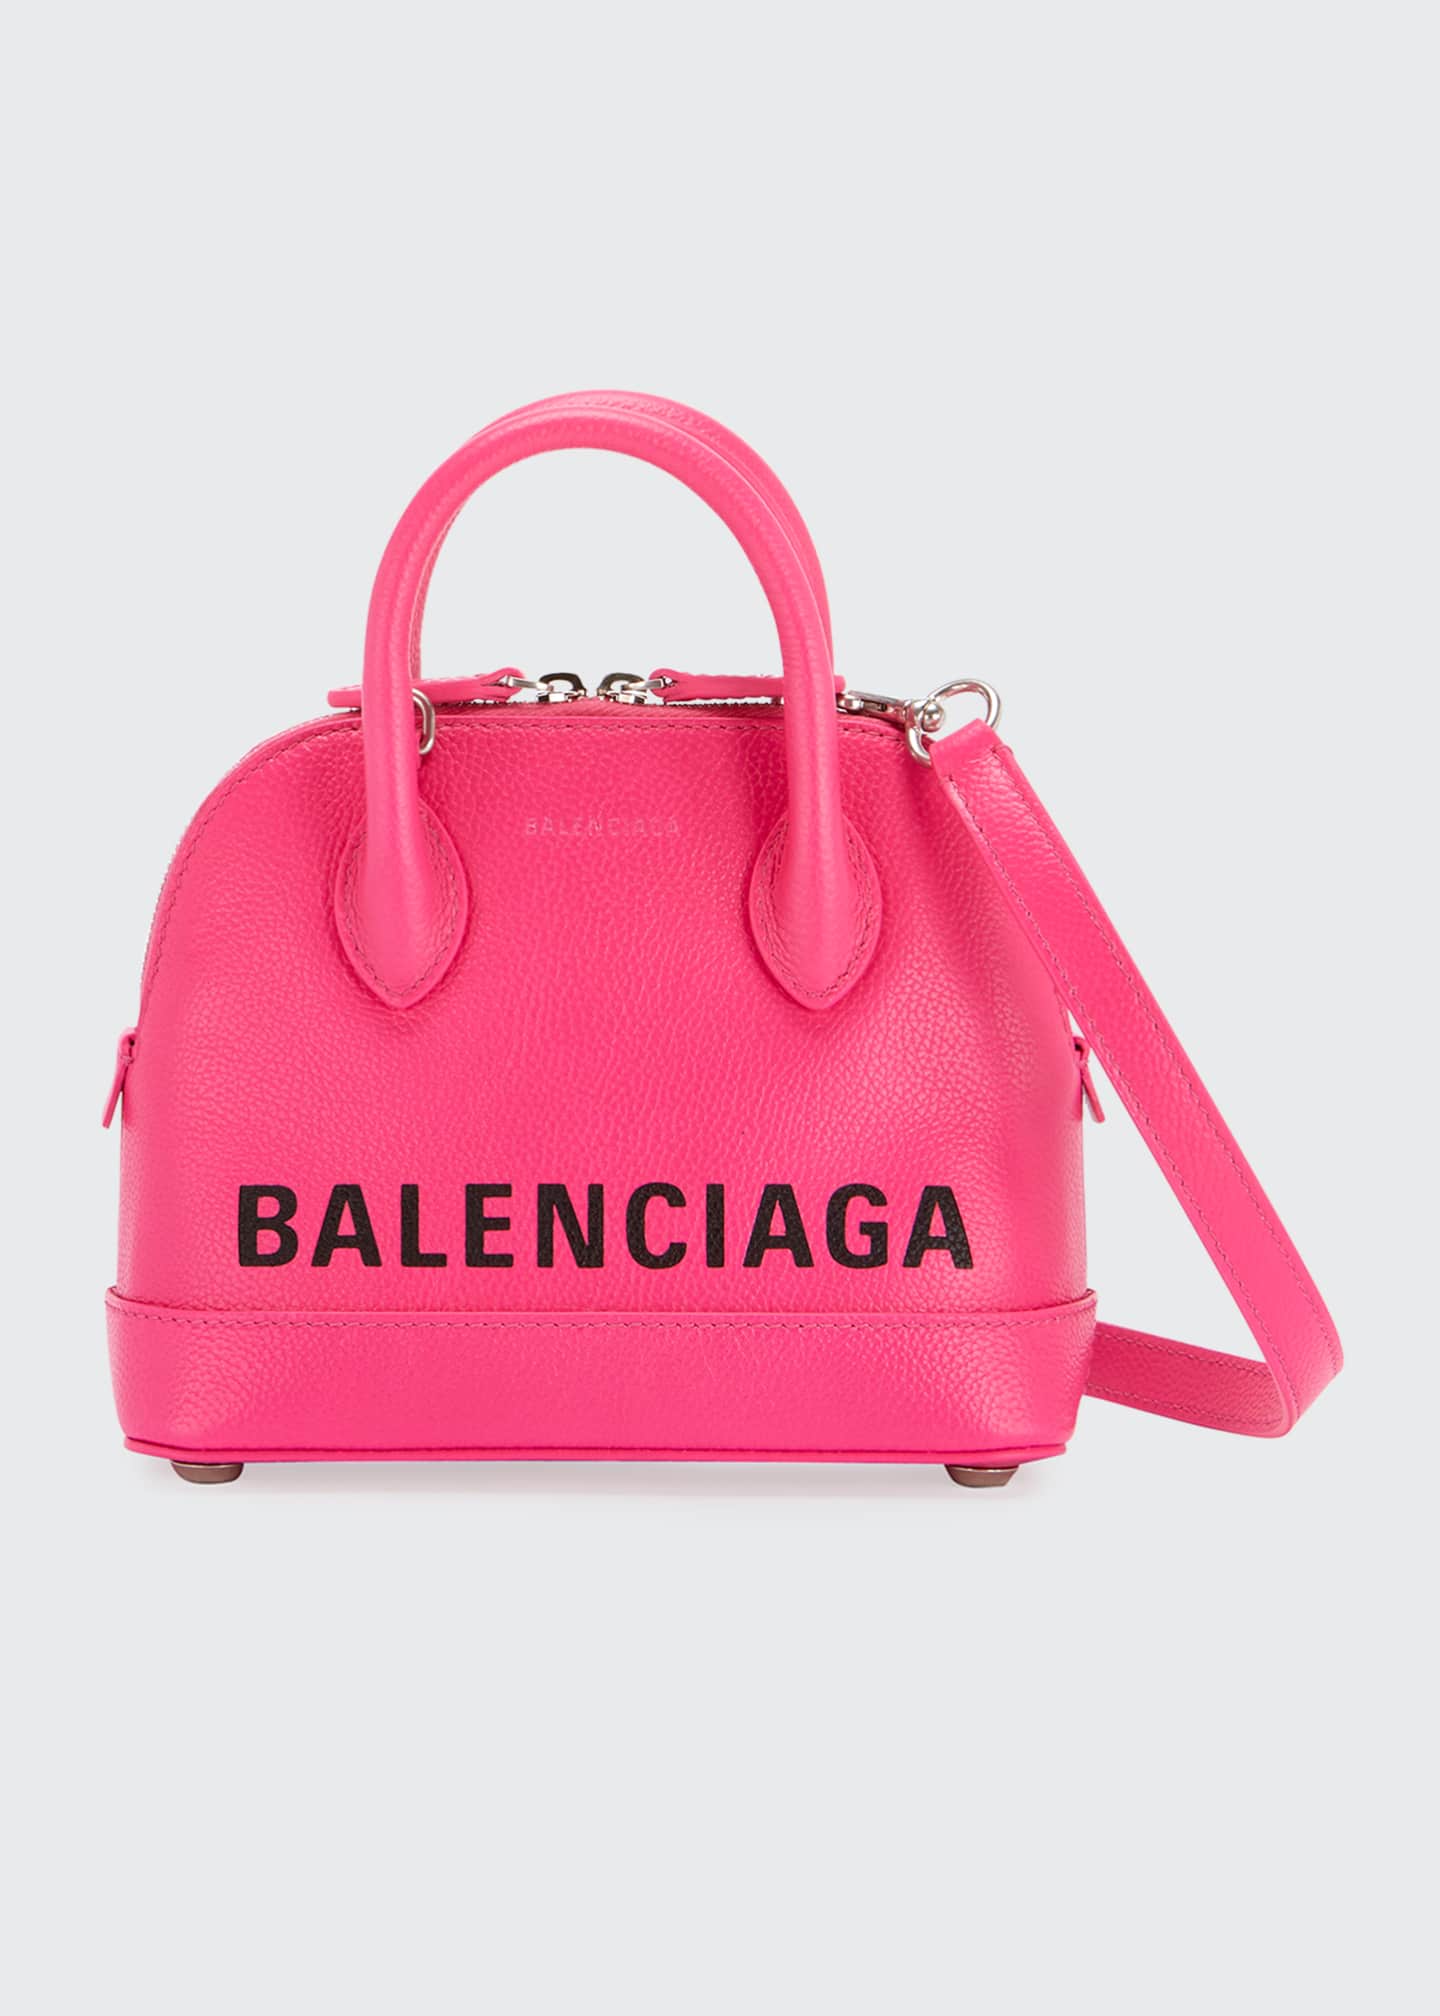 Gucci Dionysus Small Web-Stripe Top-Handle Satchel Bag